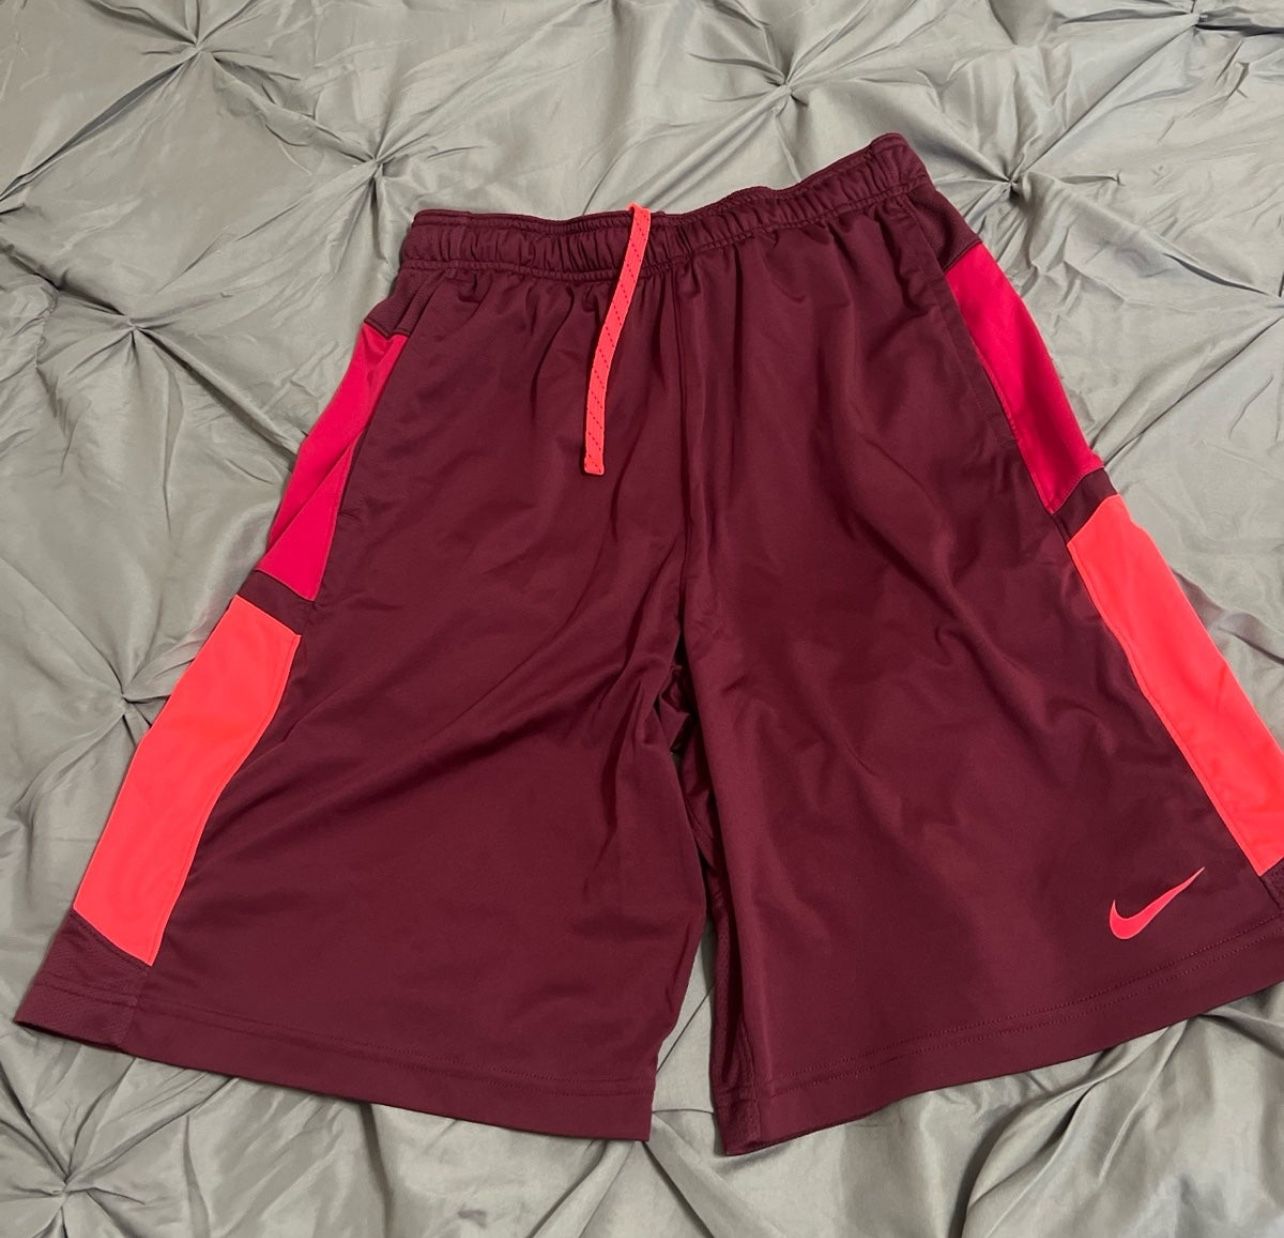 Mens Medium Nike Athletic Shorts